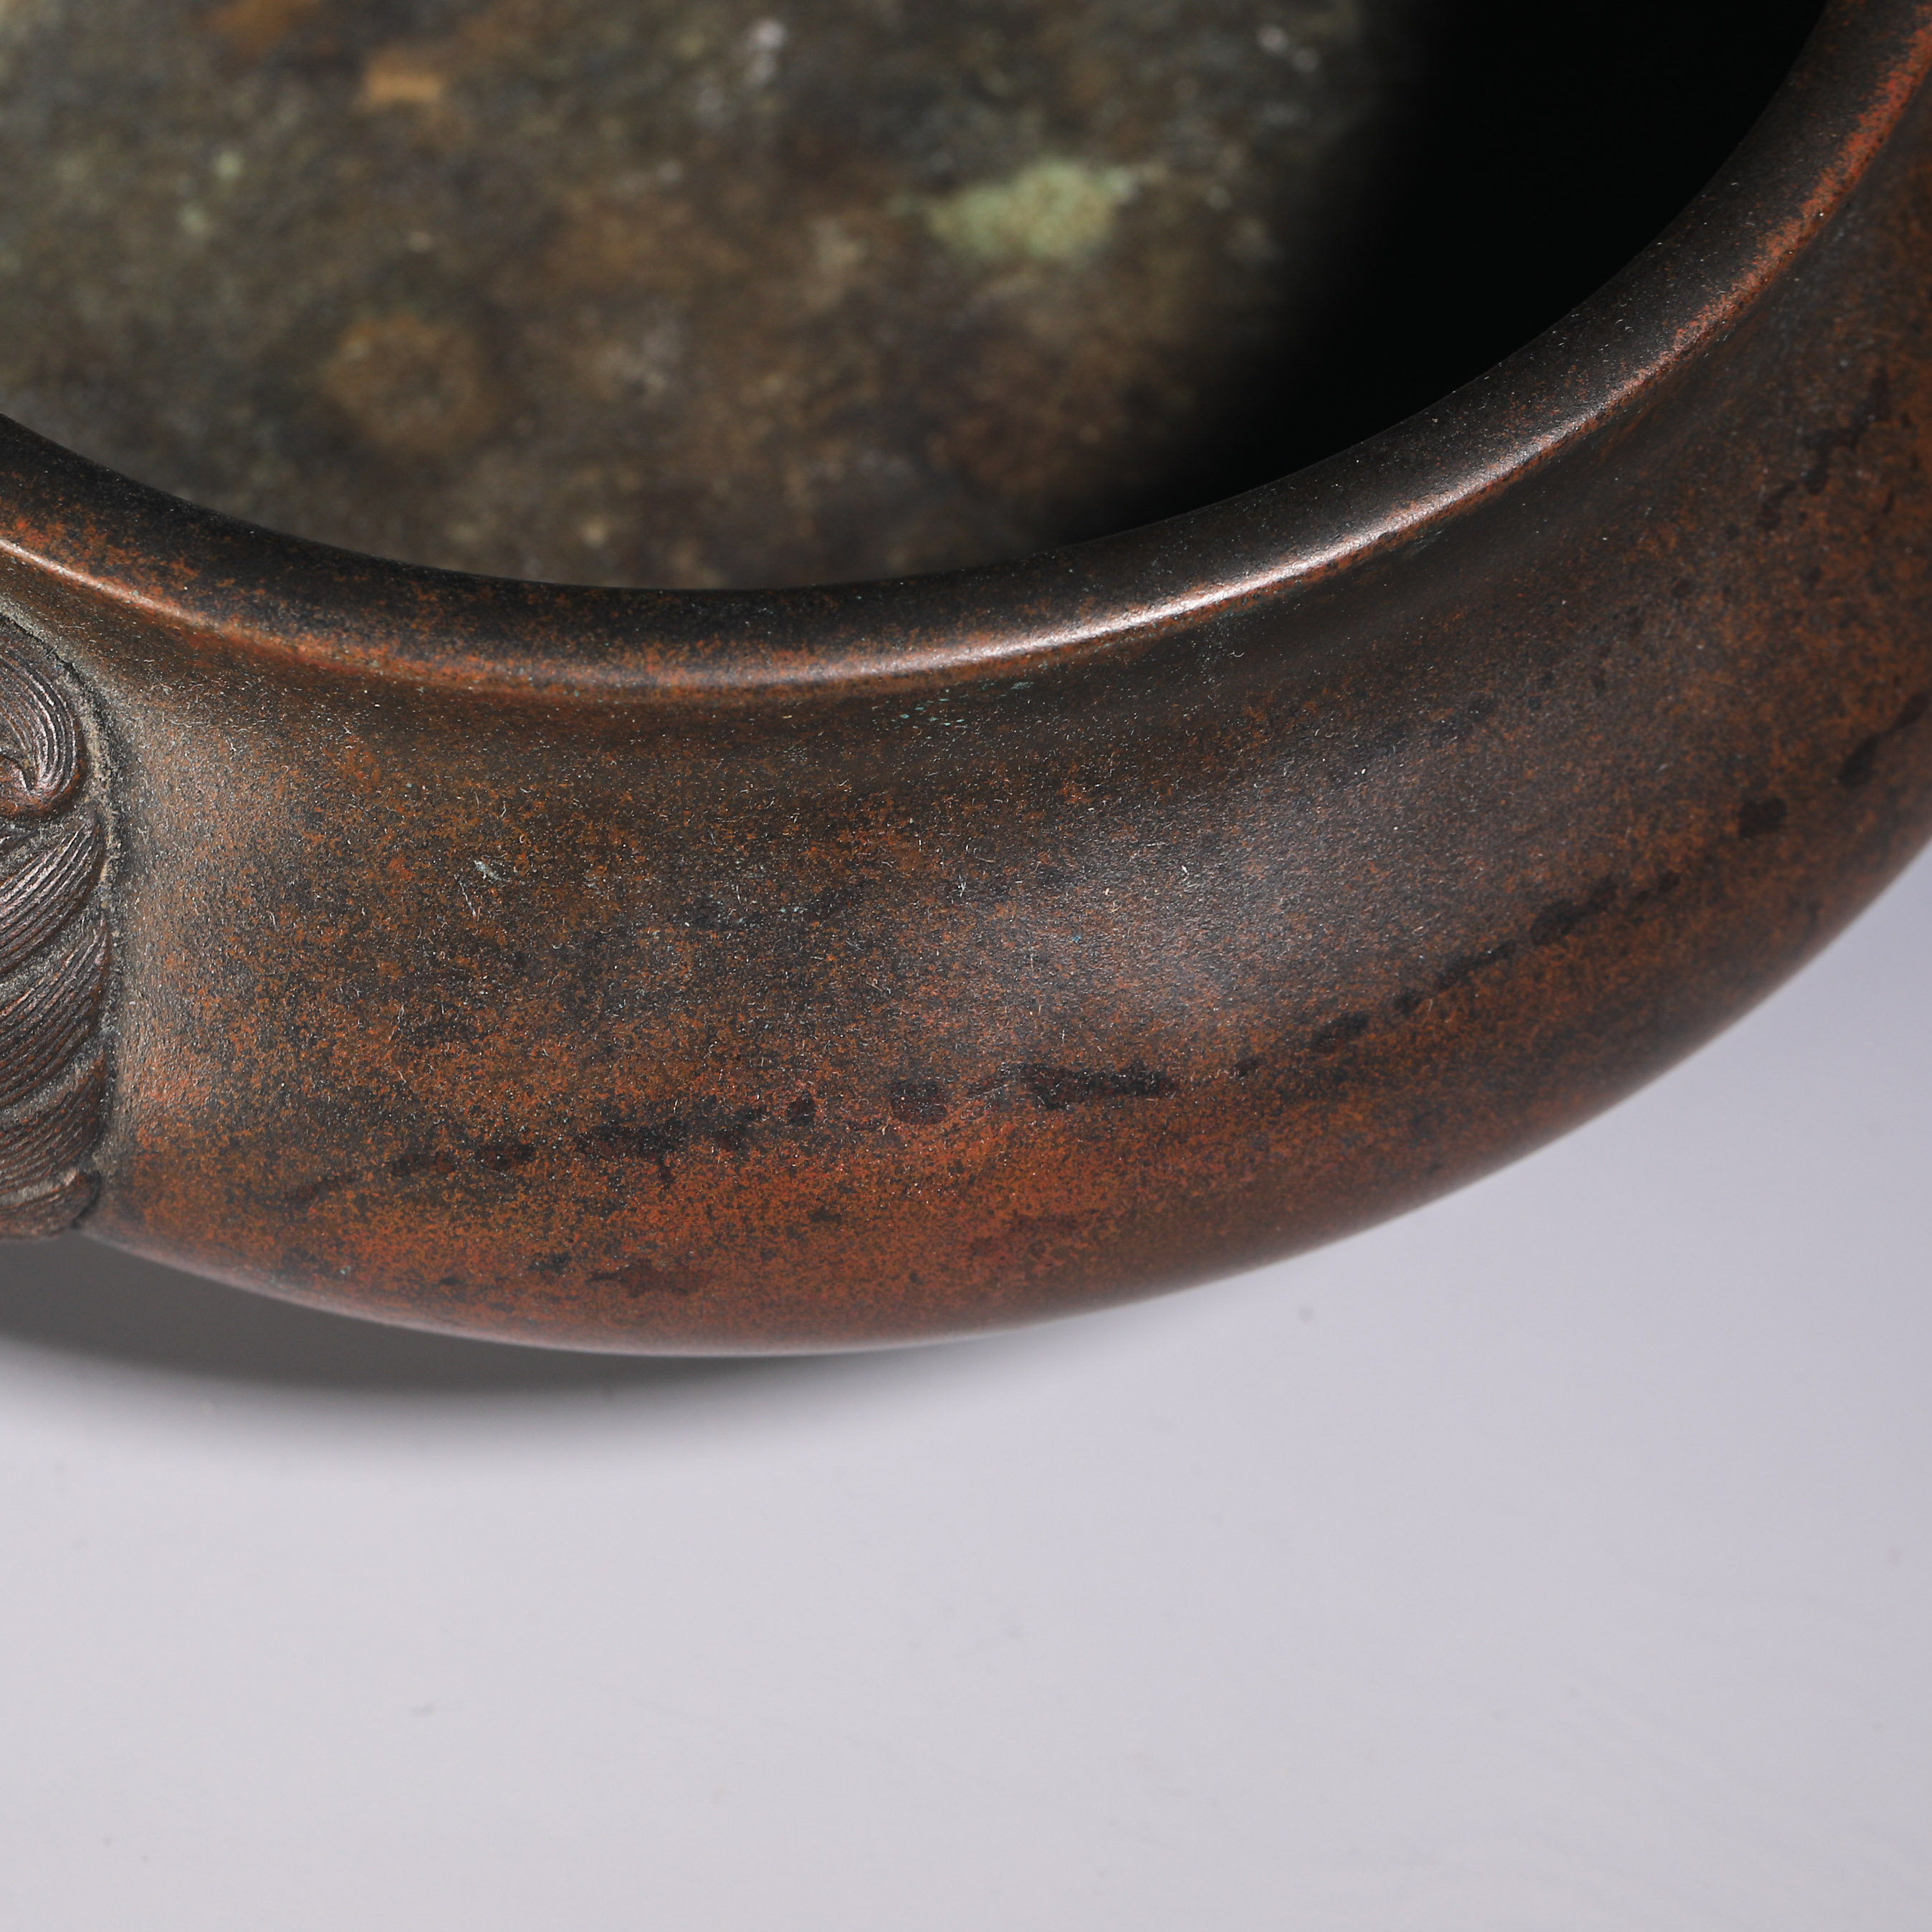 Ming dynasty beast head incense burner - Image 6 of 9